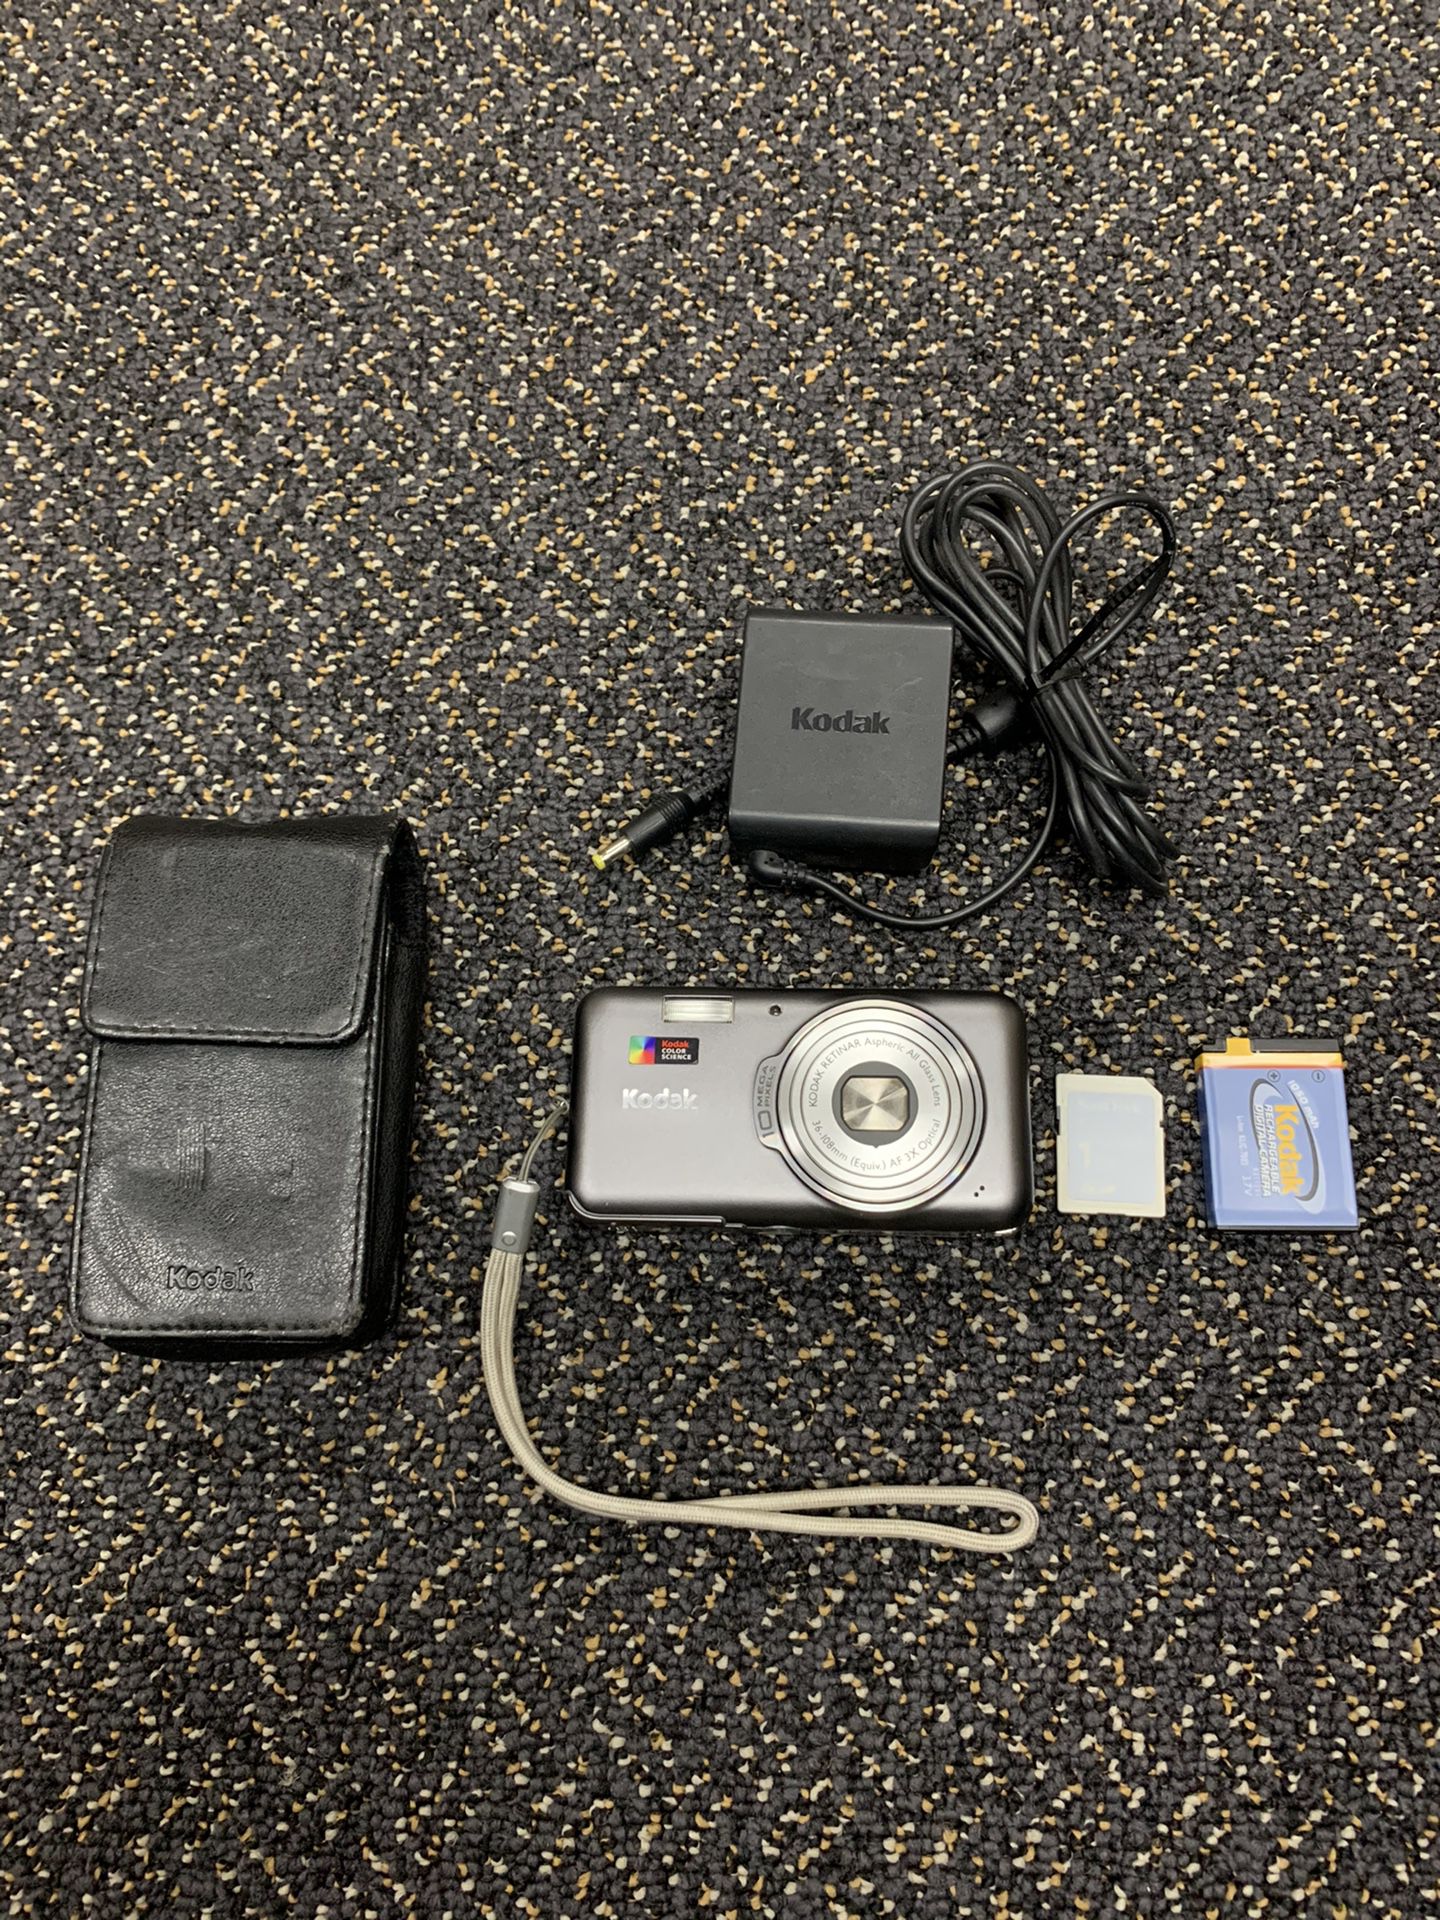 Kodak EasyShare V1003 10MP Digital Camera 1GB SD Card With Carrying Case